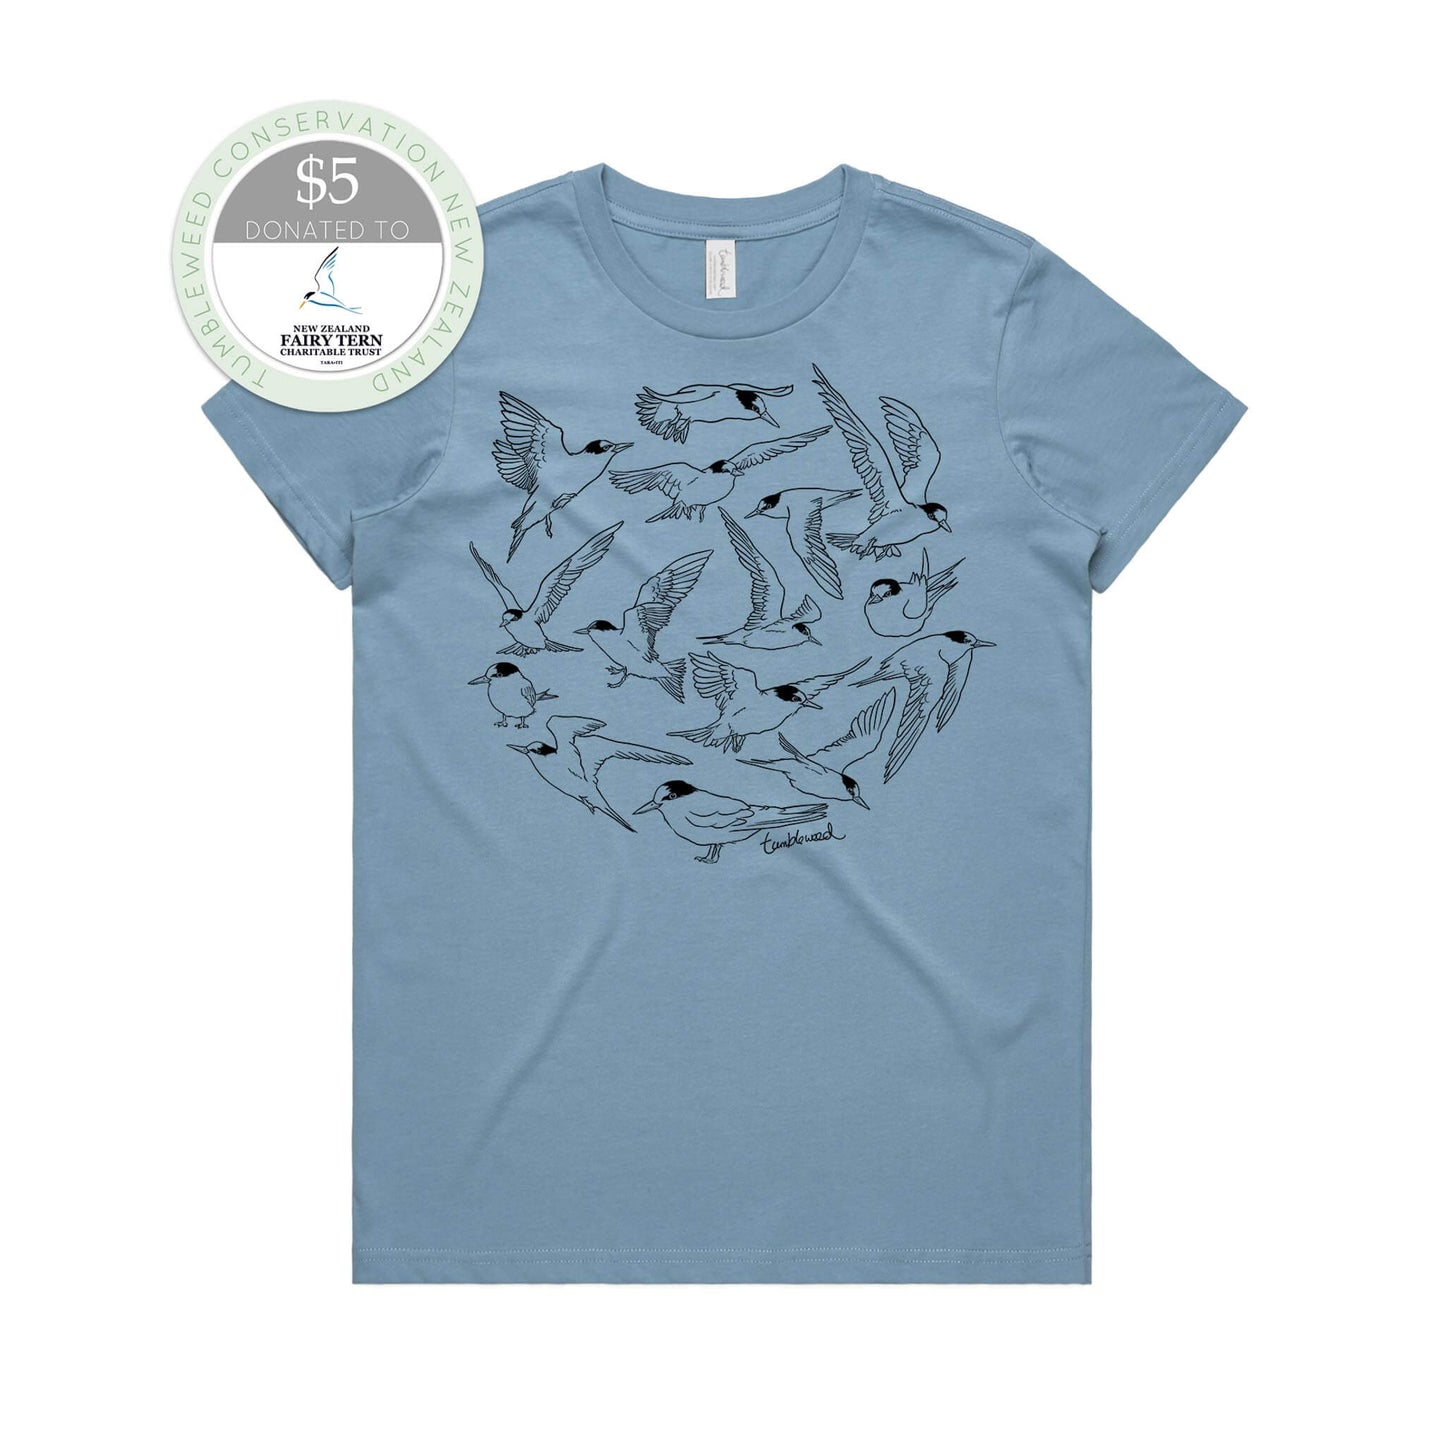 Sage, female t-shirt featuring a screen printed fairy tern/tara iti design.